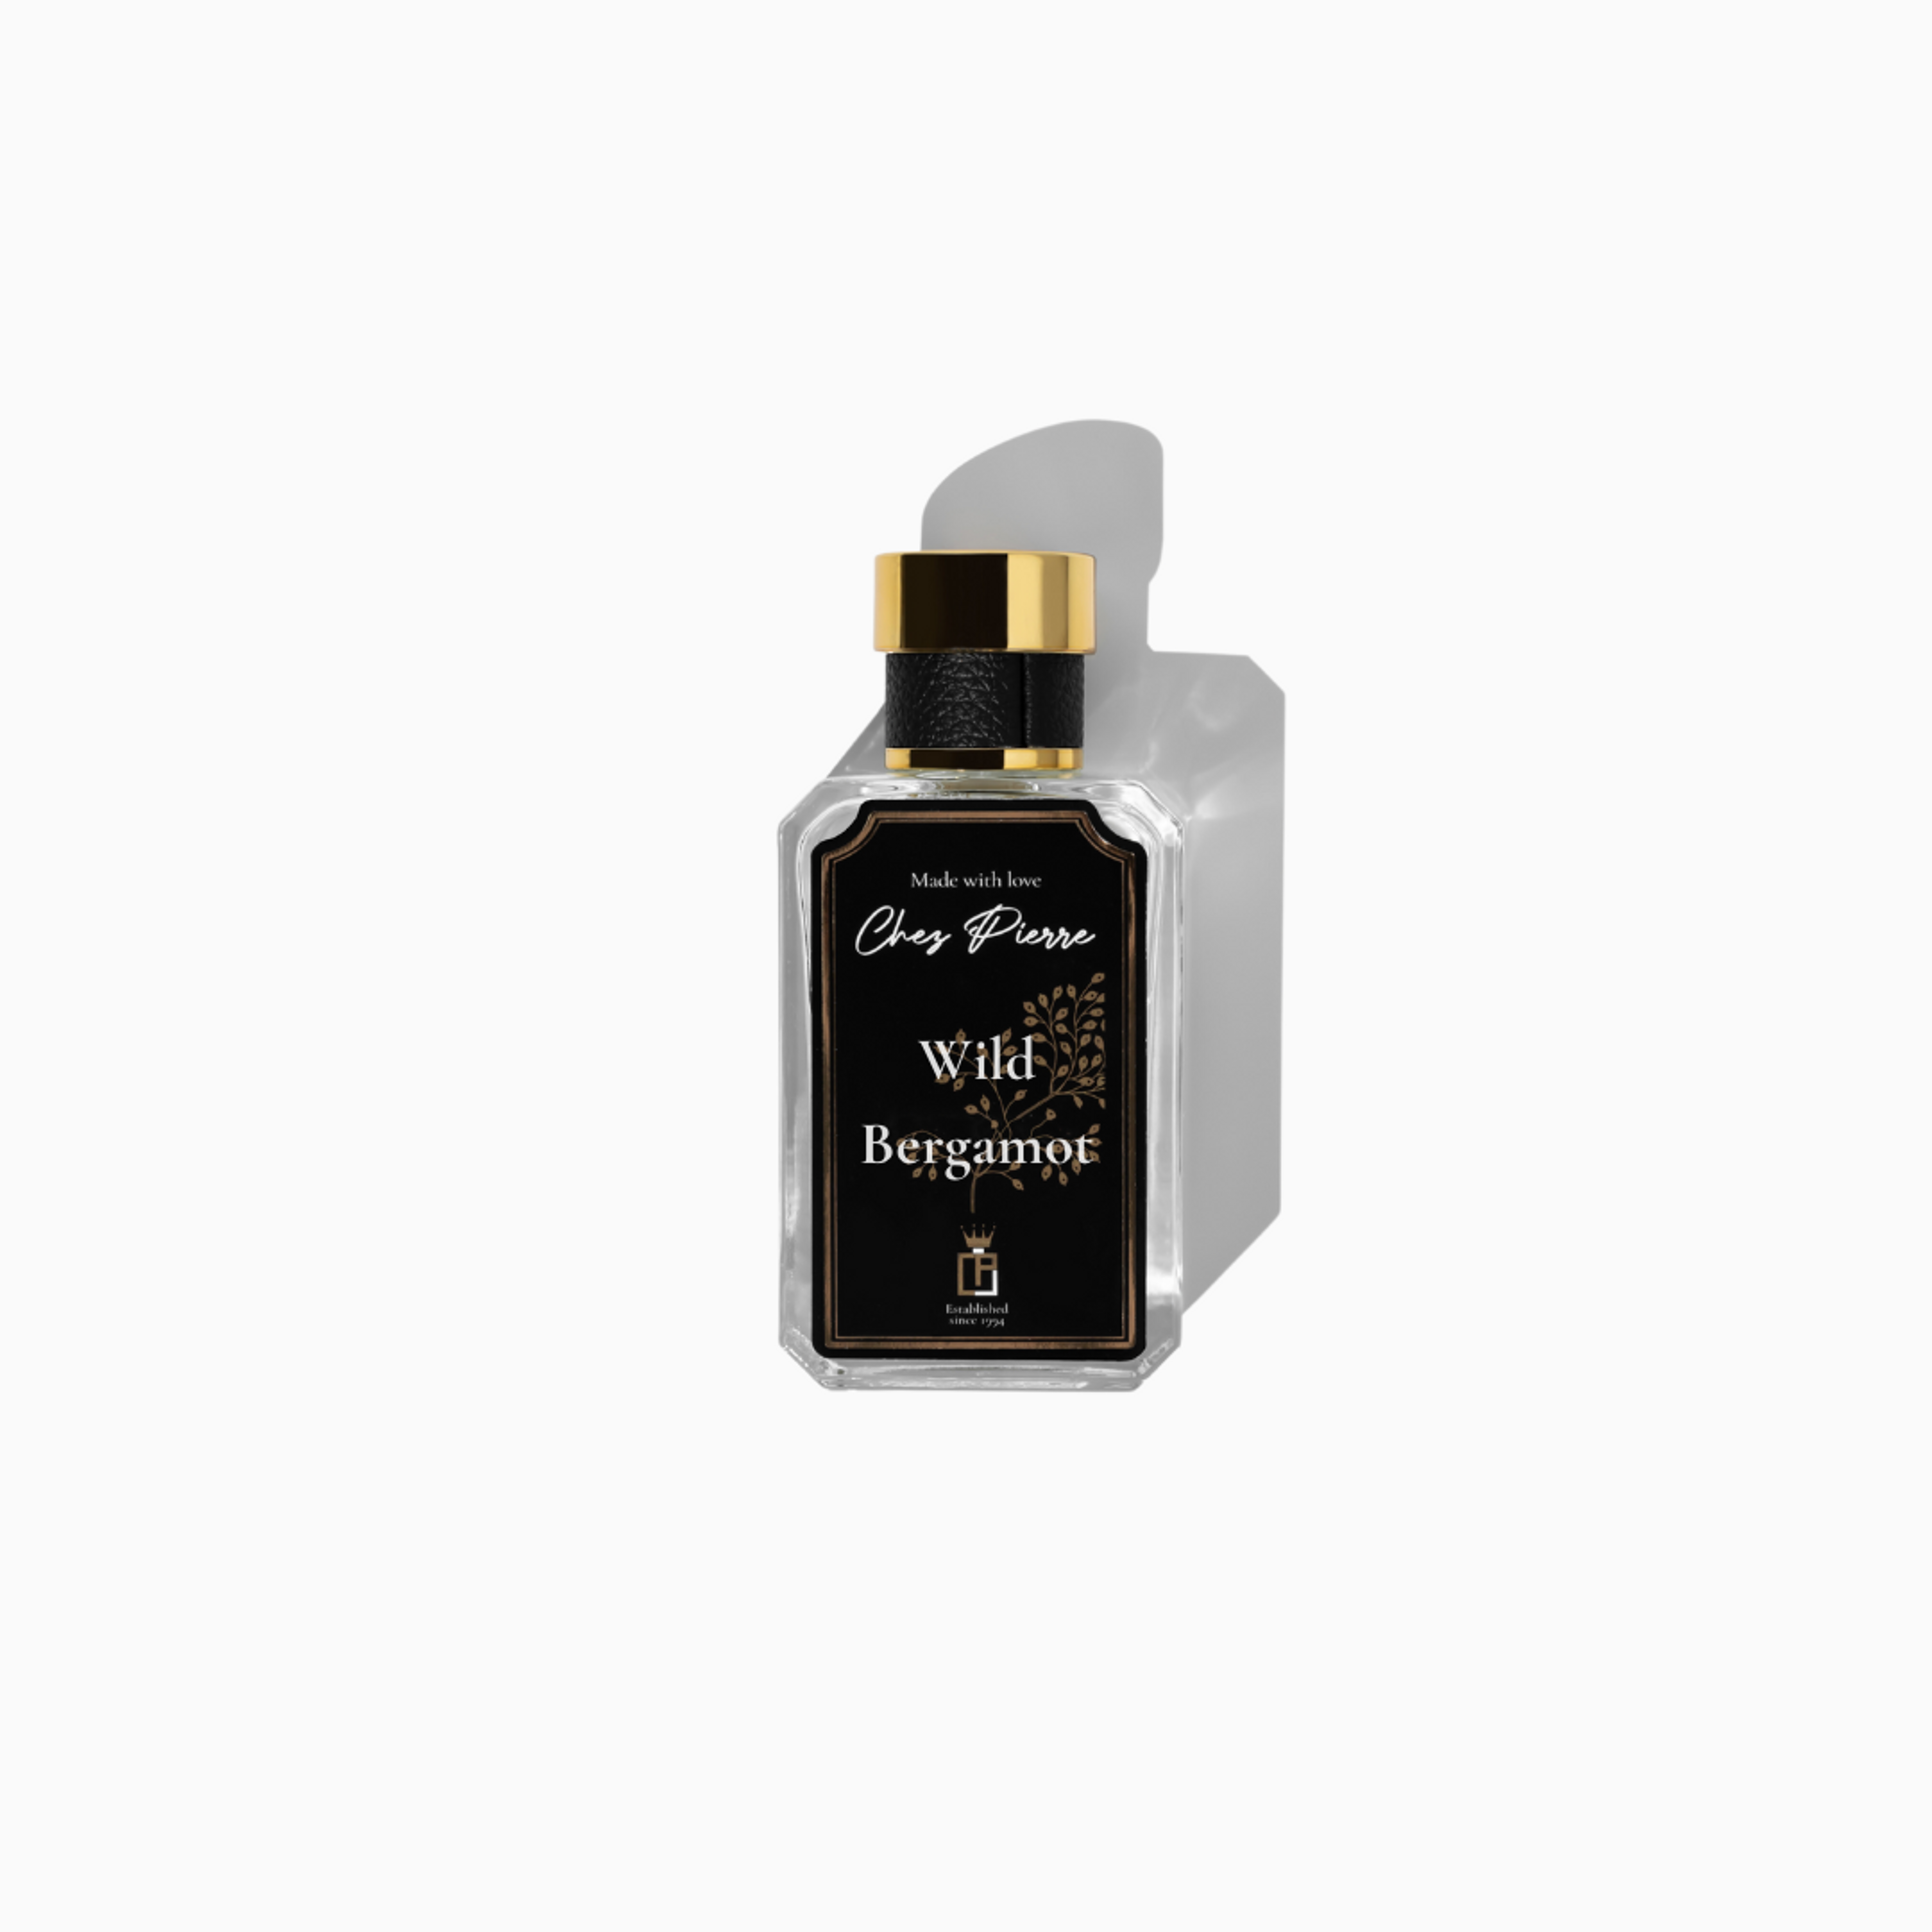 Chez Pierre's Wild Bergamot Perfume Inspired By Dior Sauvage